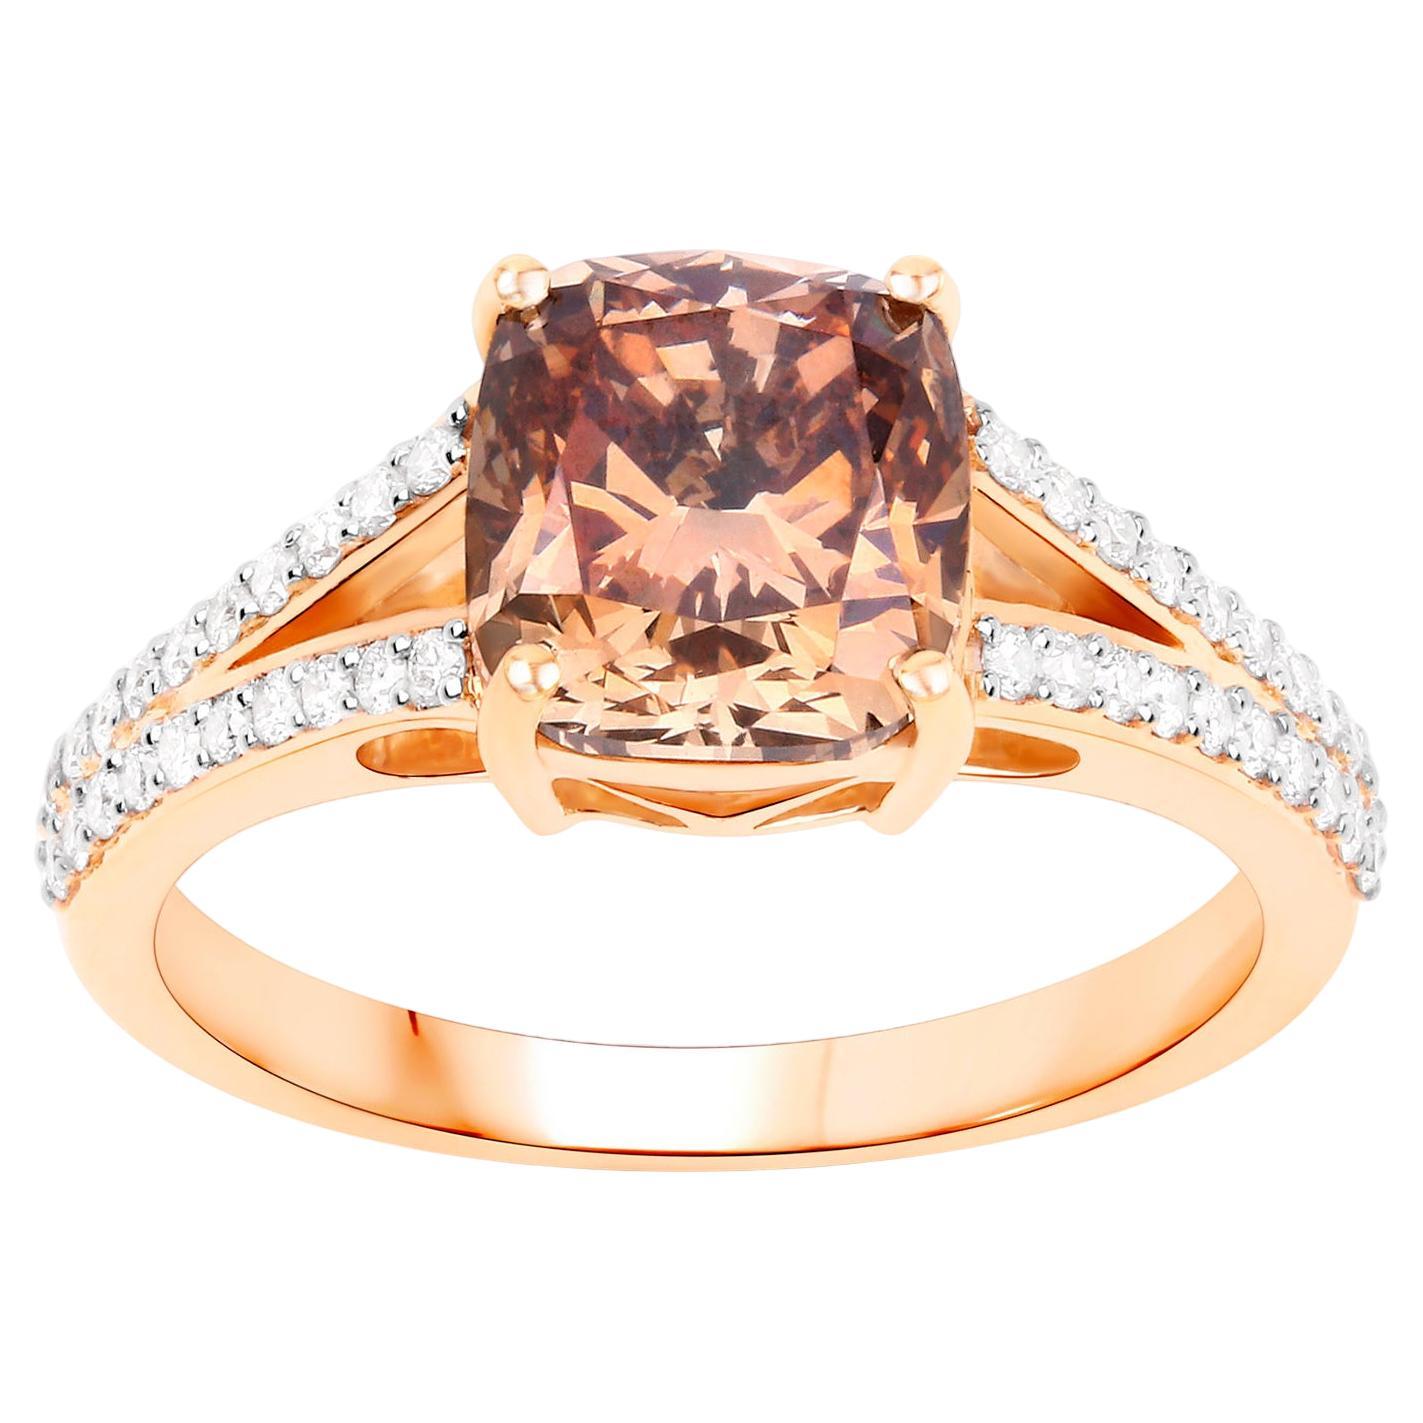 IGI Certified Brown Diamond Ring Diamond Setting 3.35 Carats 18K Rose Gold For Sale